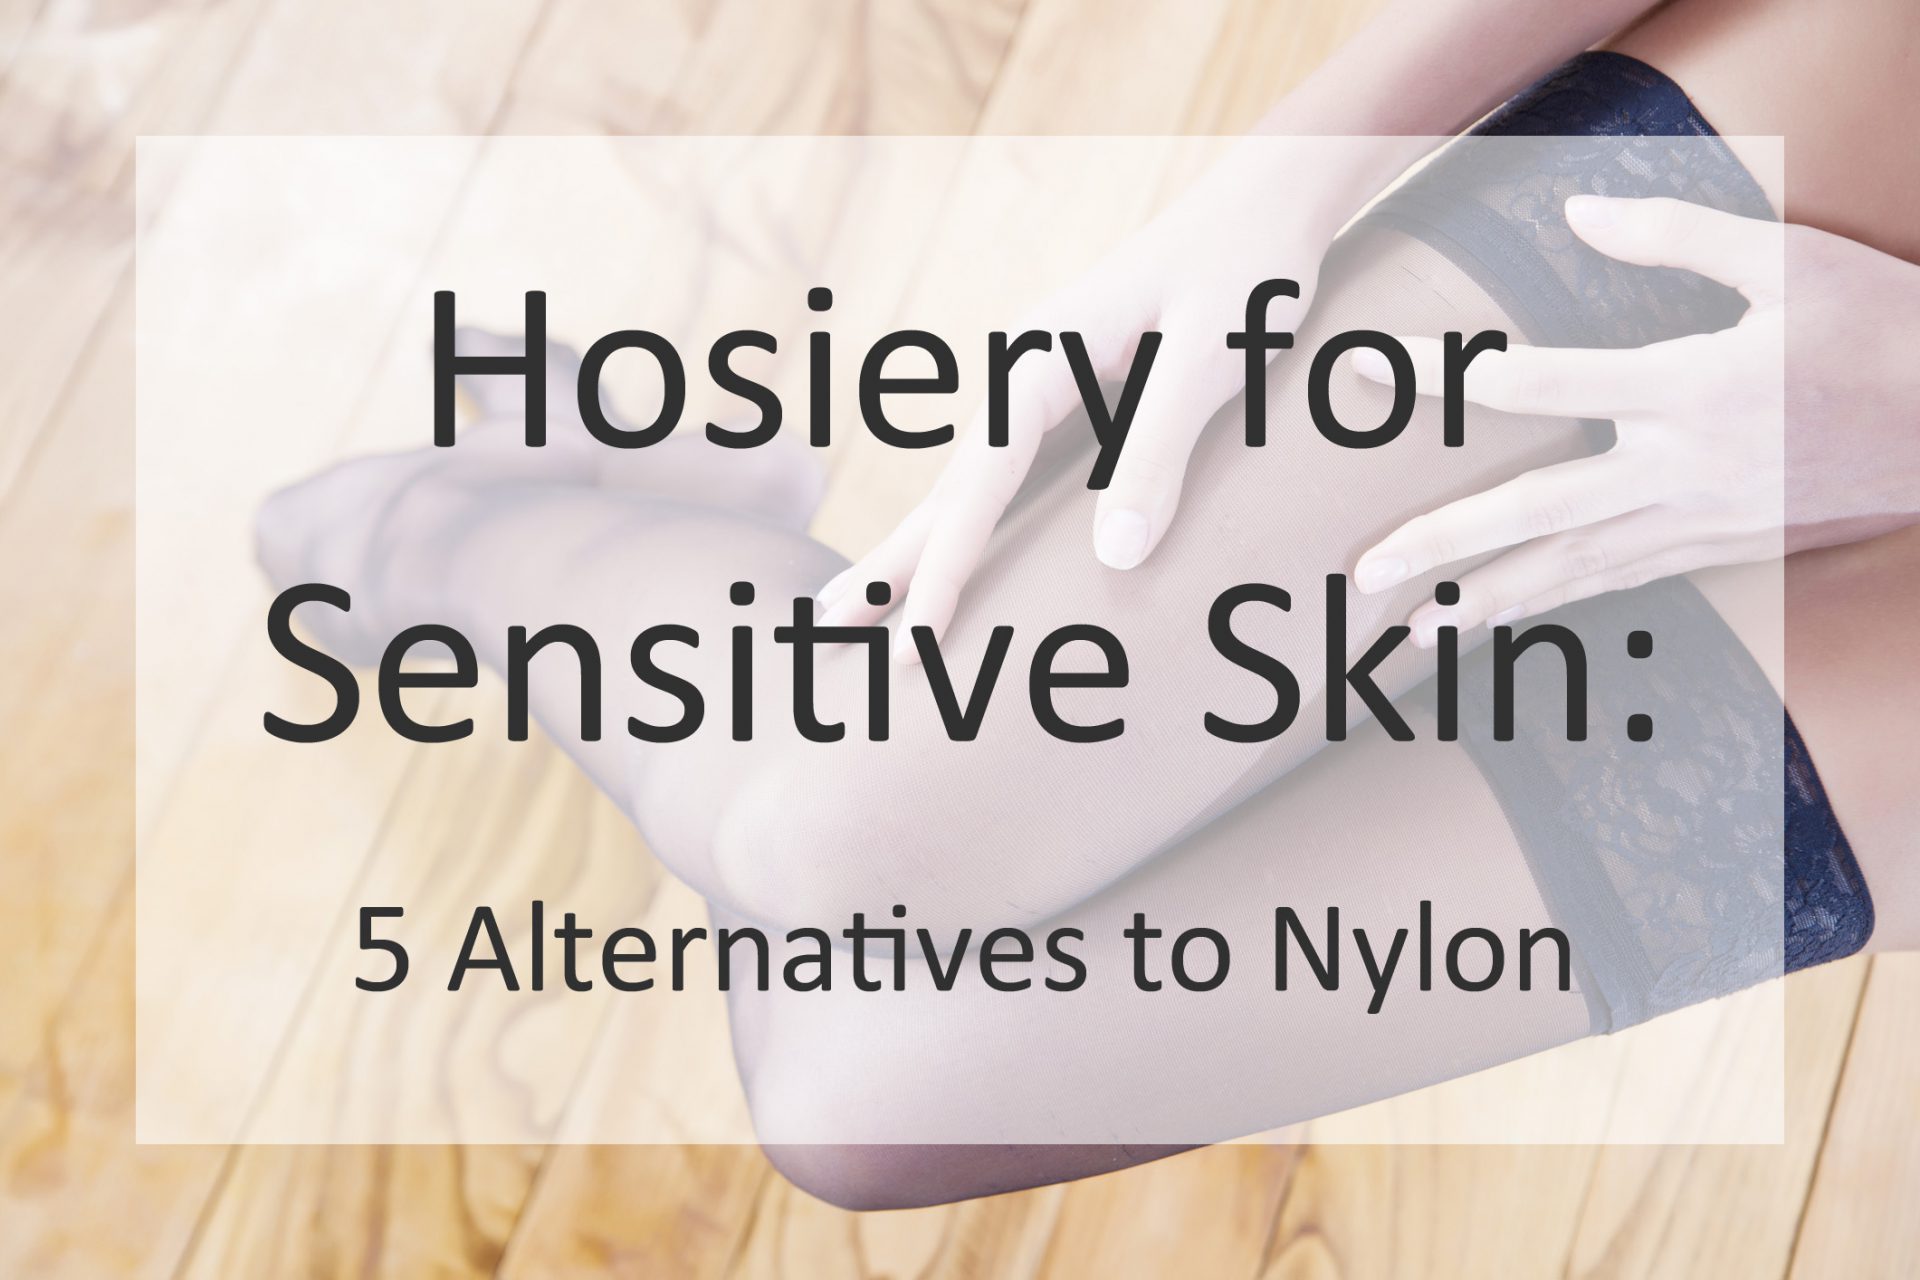 7 Fabrics That Can Really Irritate Sensitive Skin